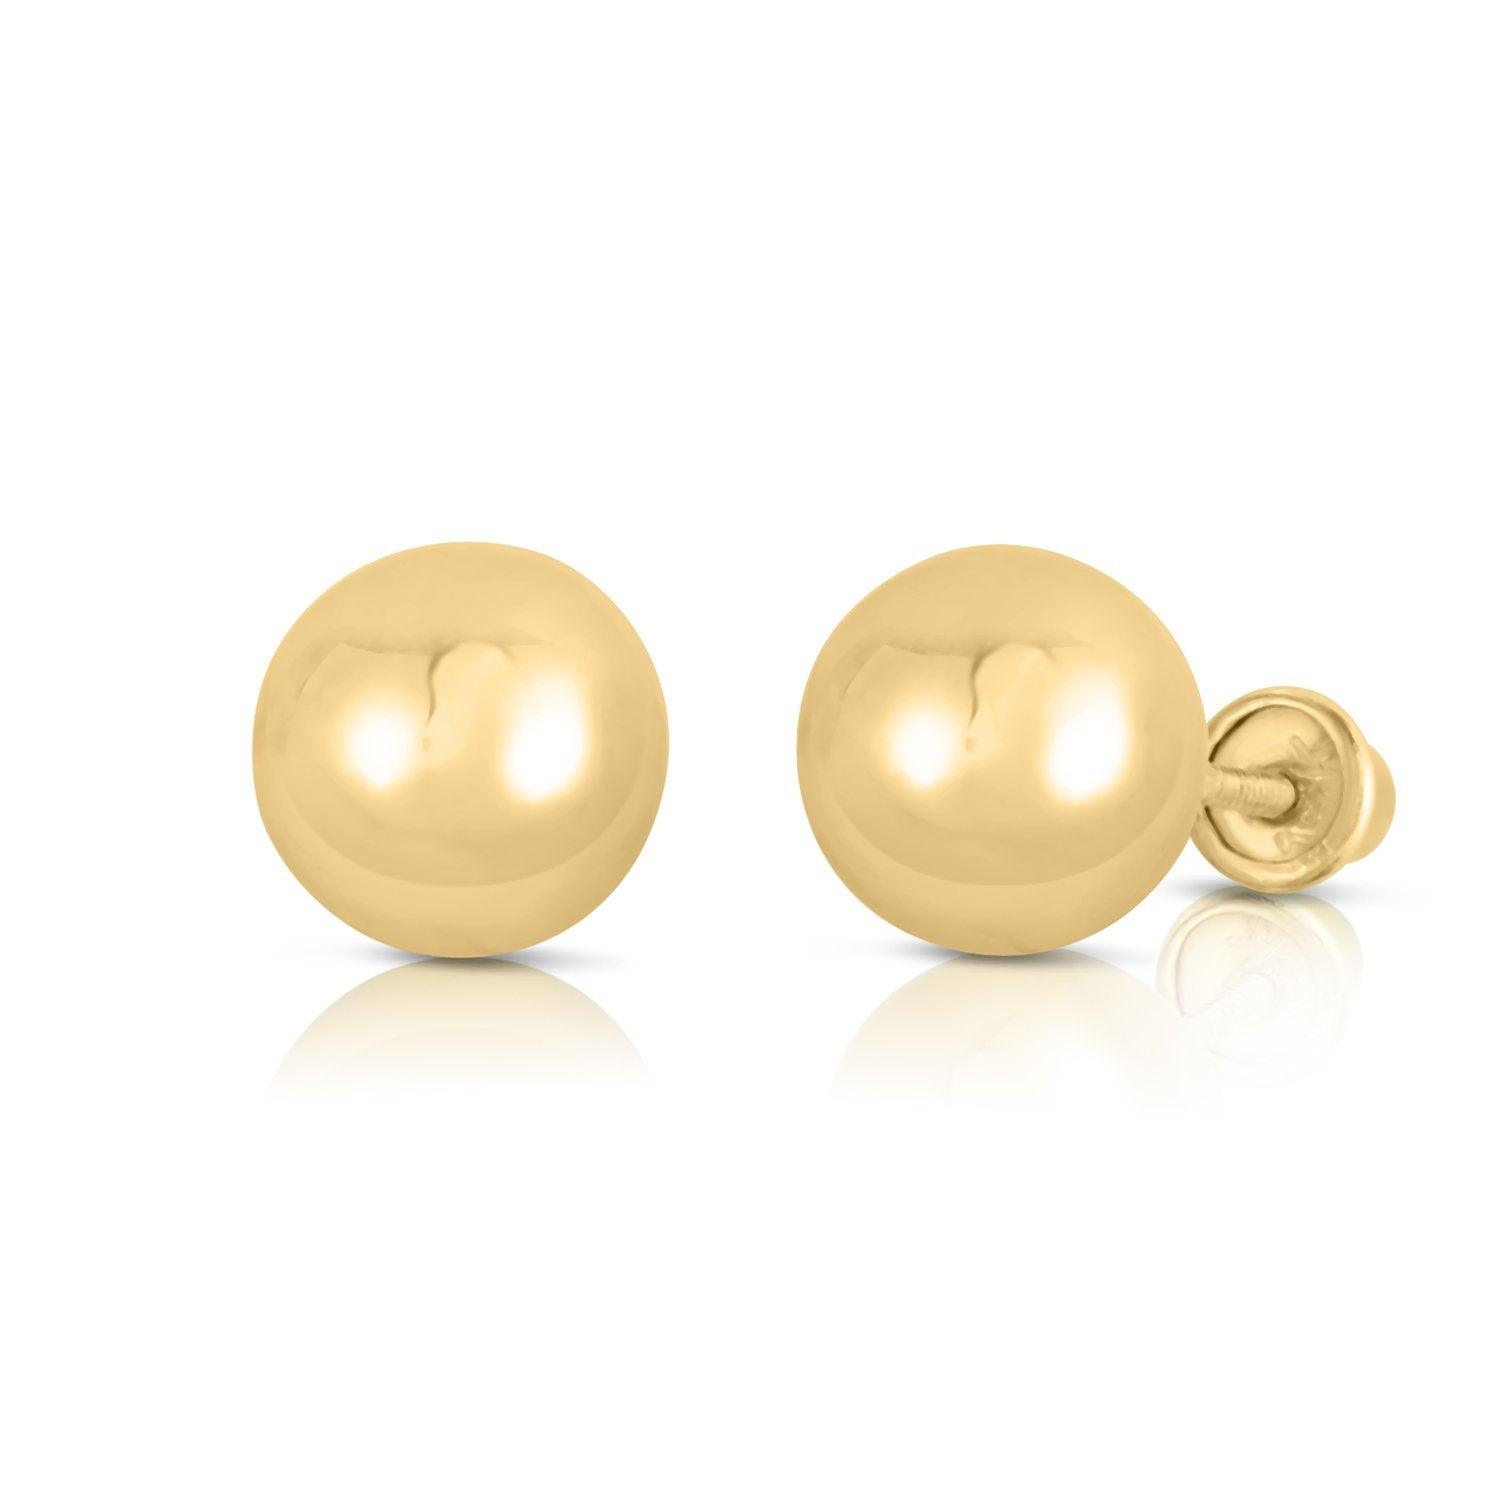 files/14k-yellow-gold-ball-stud-earrings-with-secure-screw-backs-8mm-jewelry-bubble-1.jpg